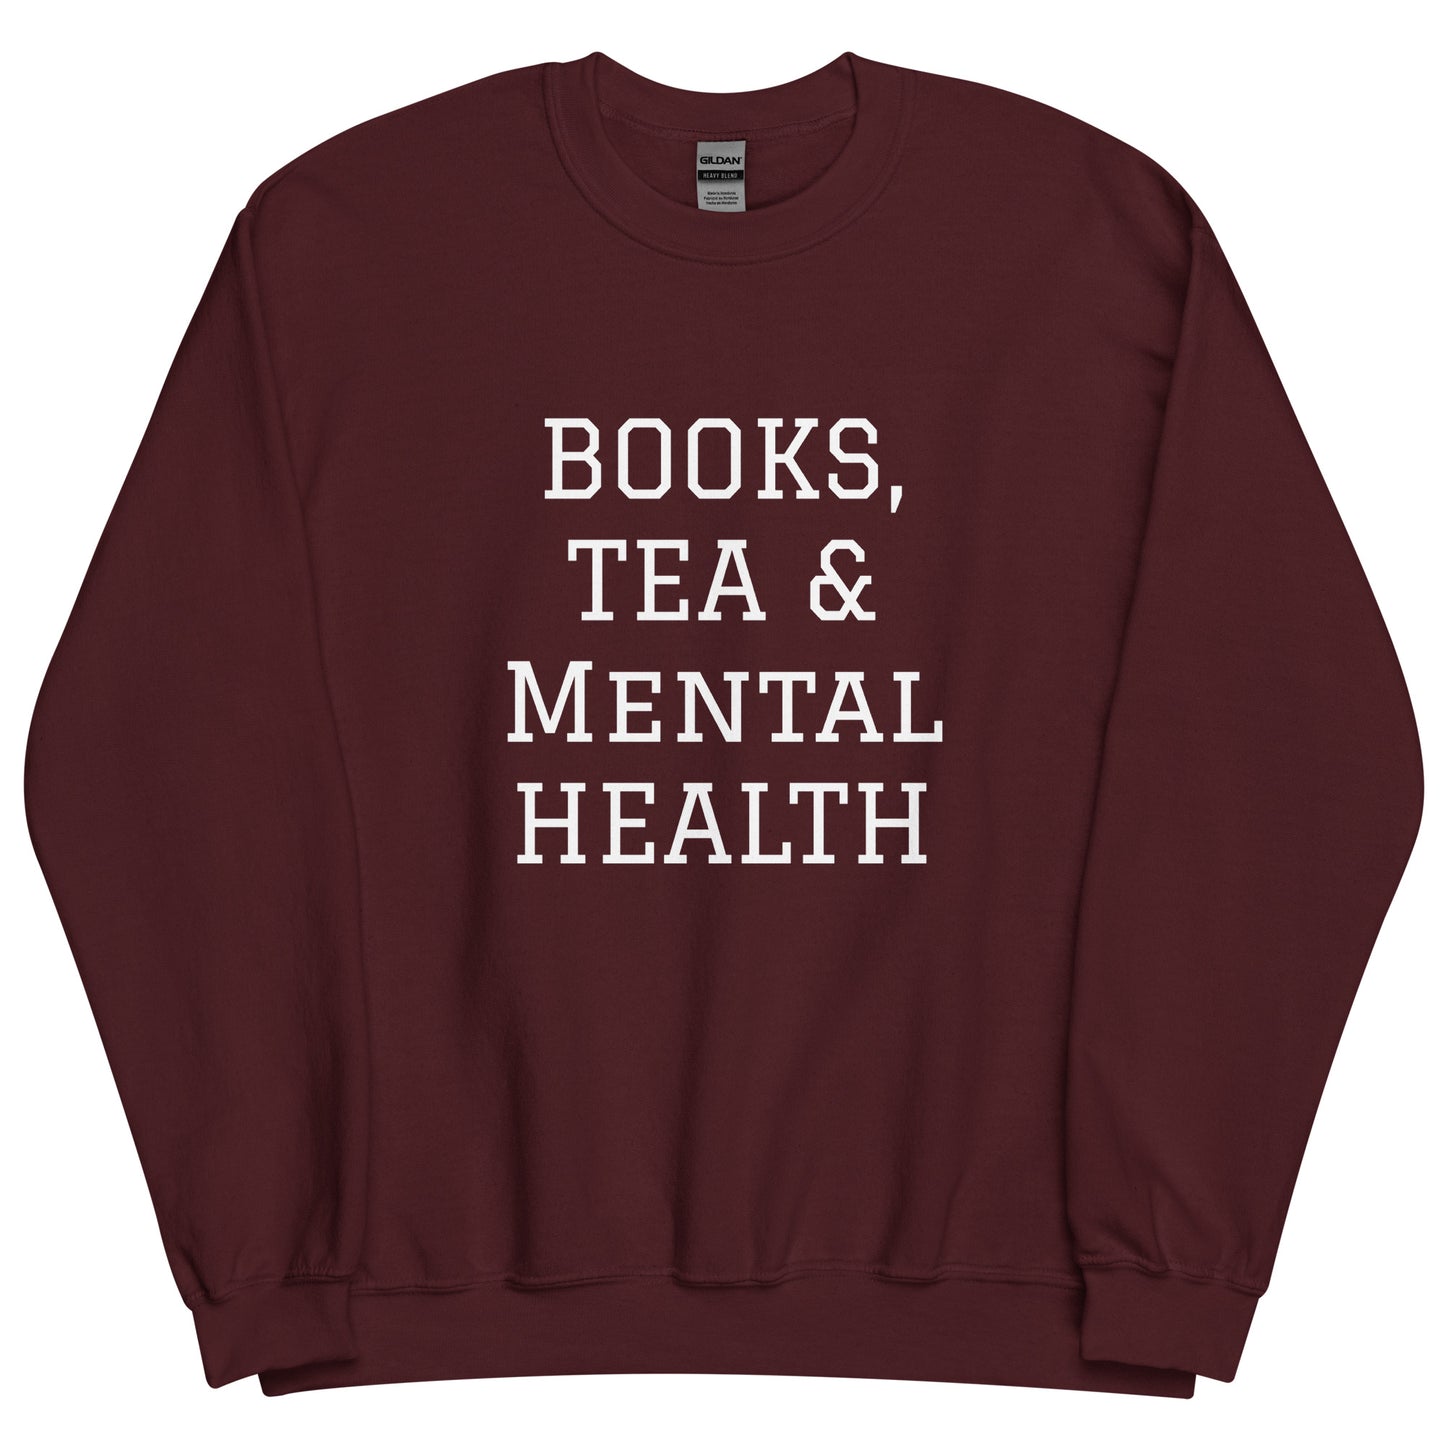 Books, Tea & Mental Health Sweatshit